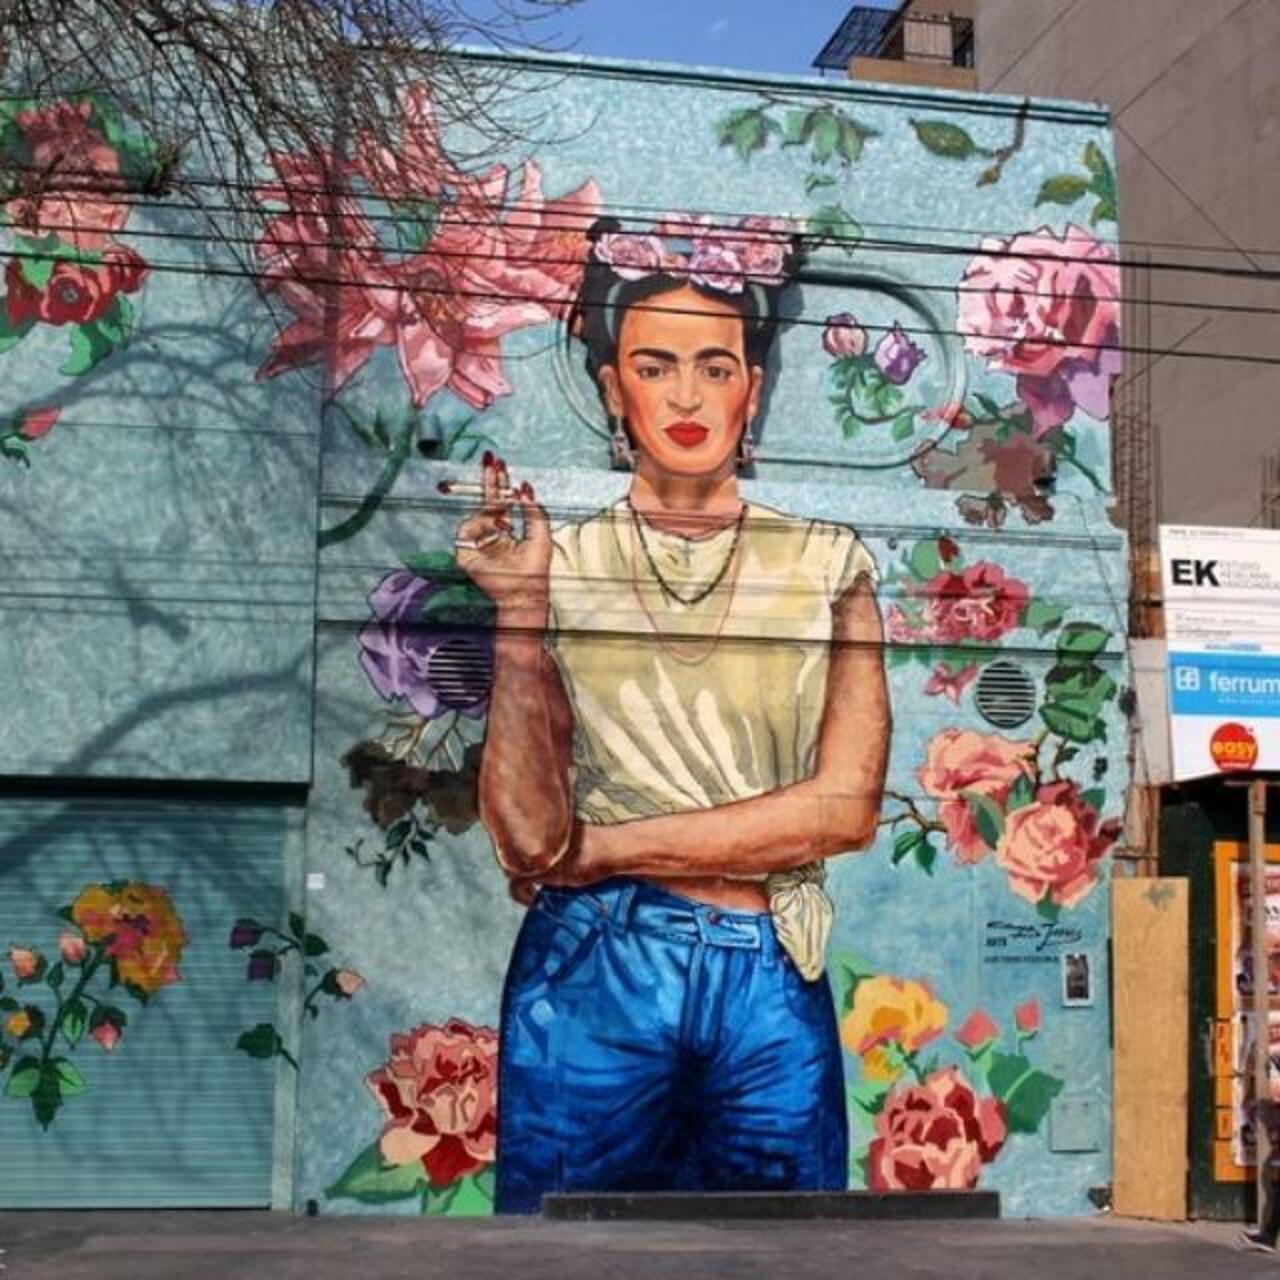 RT @chonisalv: #graffiti #streetart #Argentina #FridaKahlo http://t.co/7QYNxSvVLT